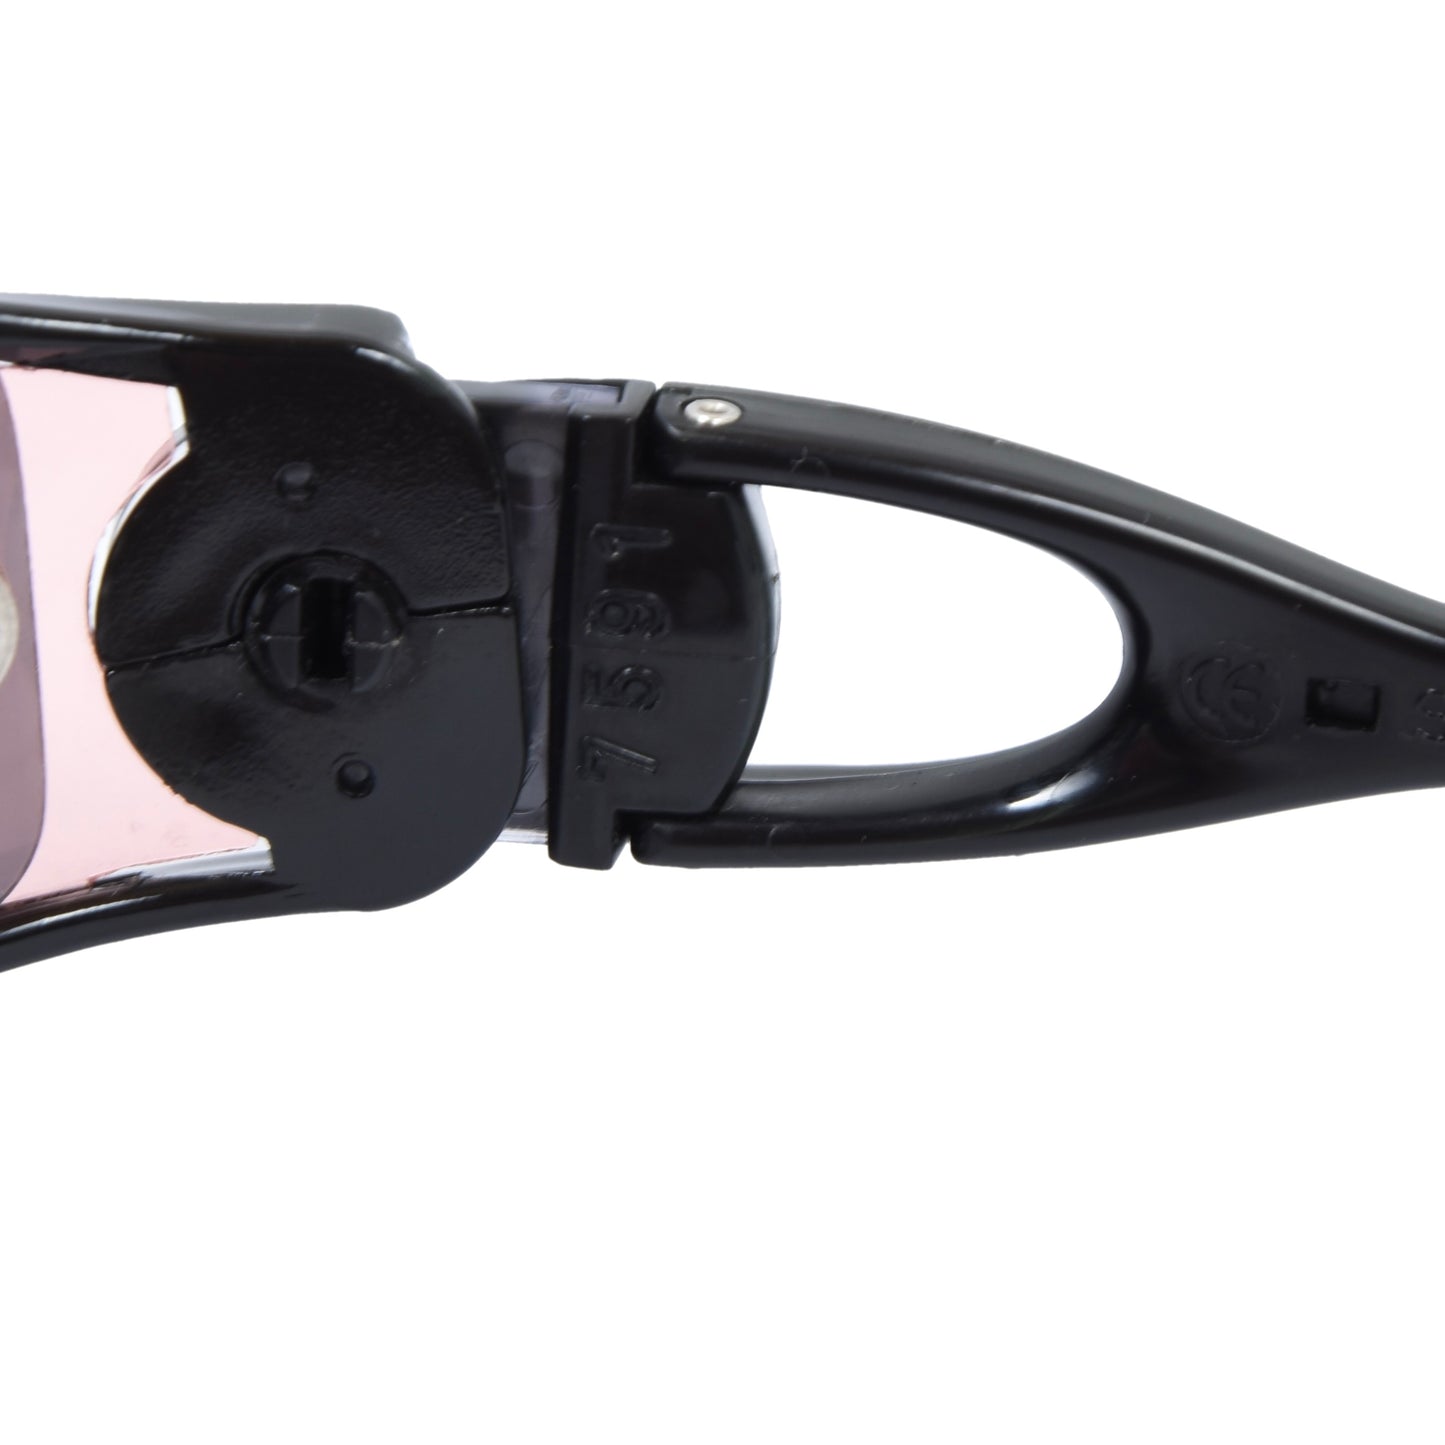 Alpina Swing 40 Shield Sunglasses - Black